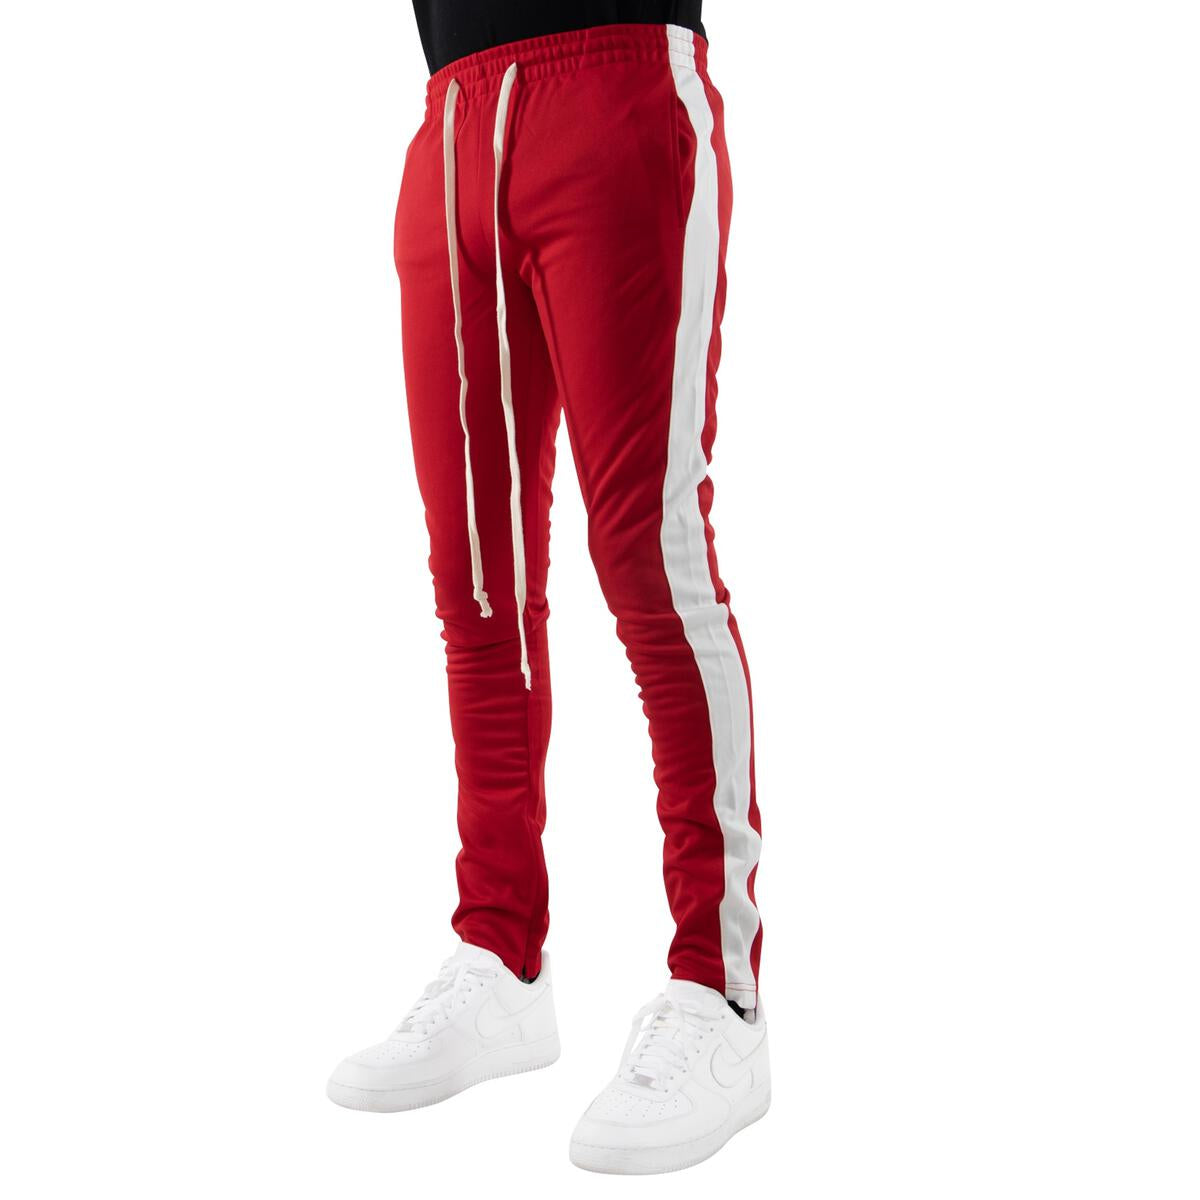 EPTM Track Pants - Red White